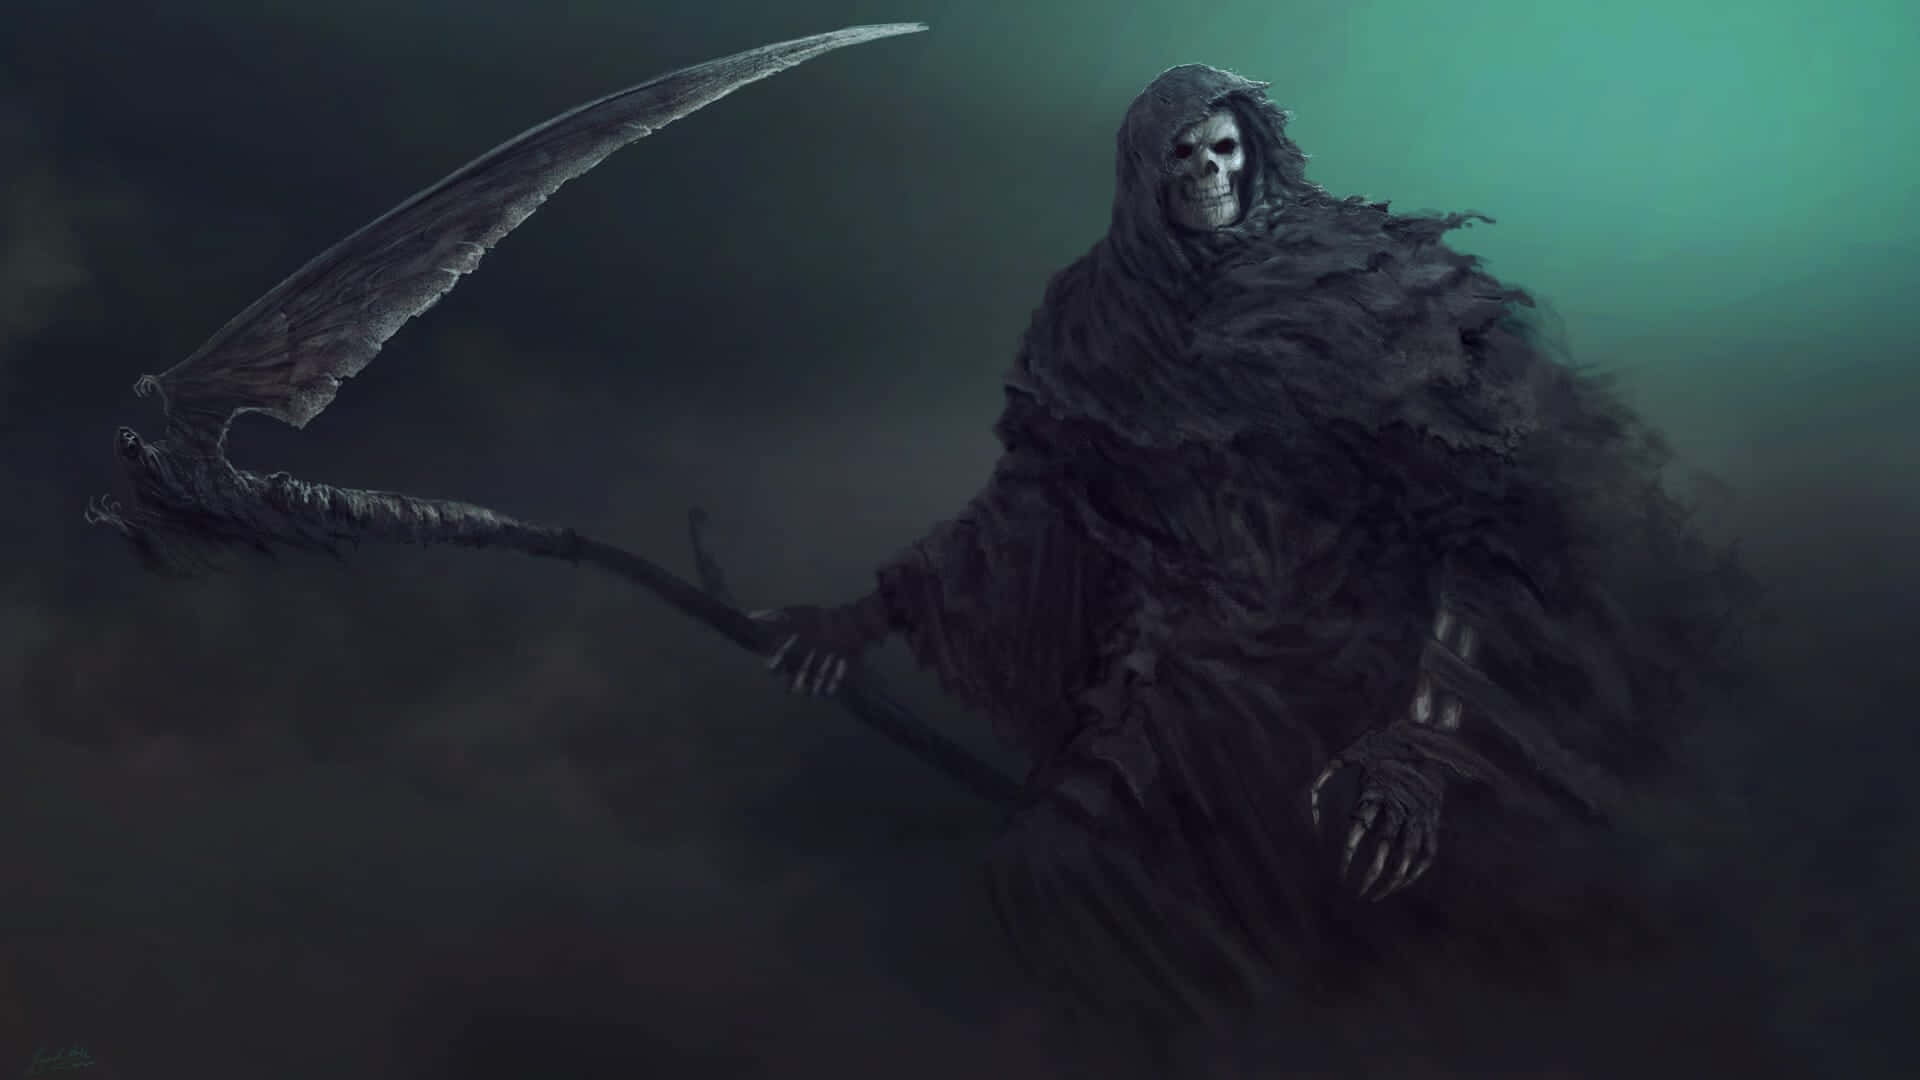 Dark Enigma of the Grim Reaper